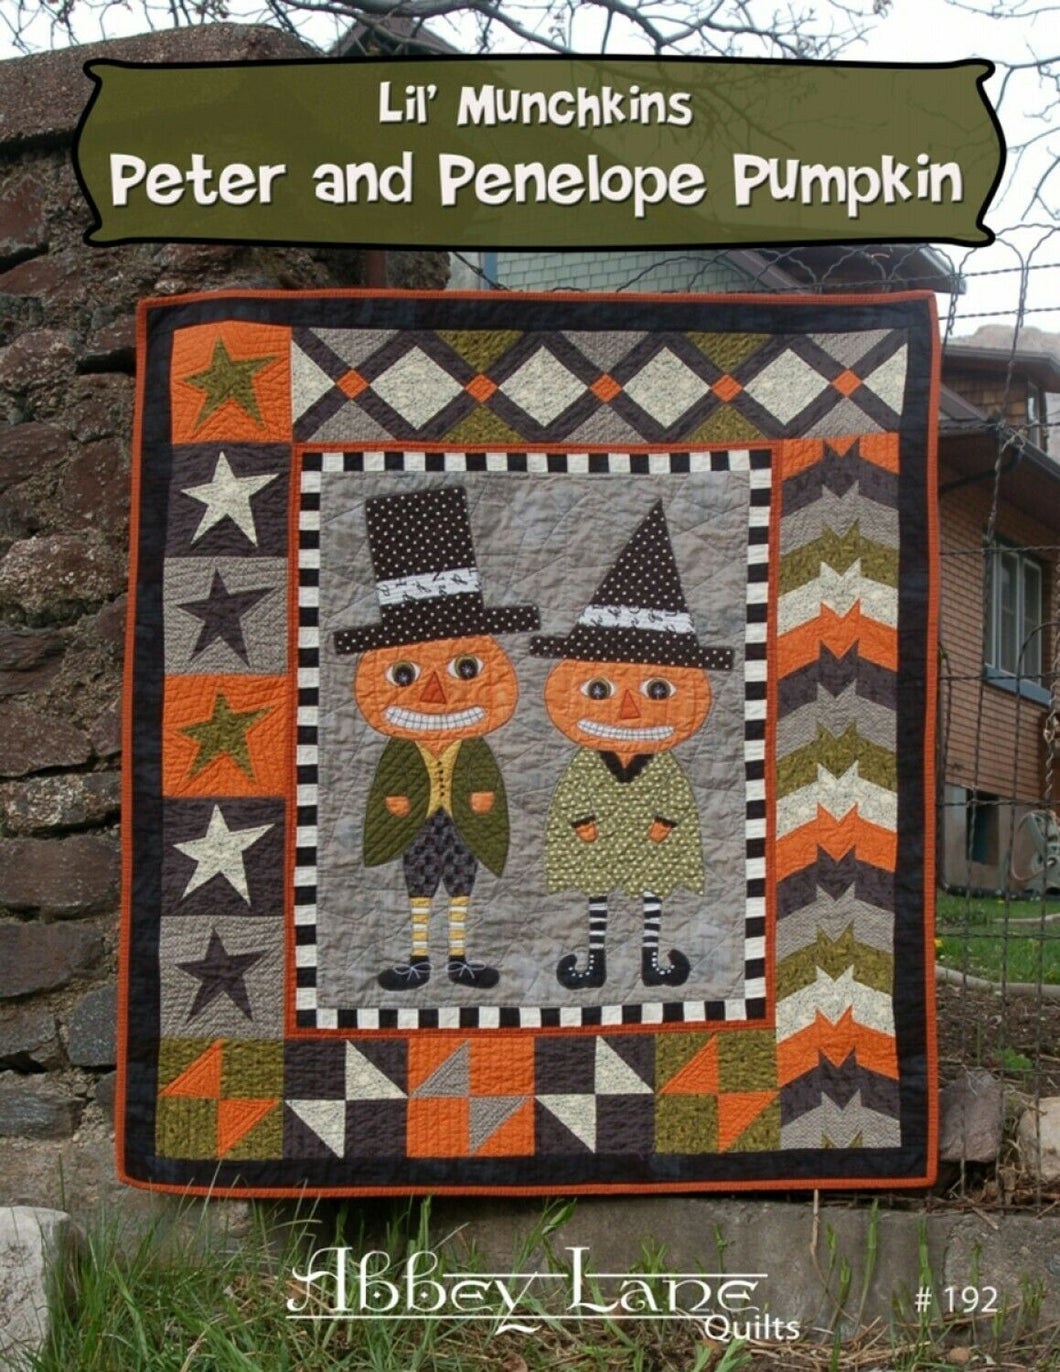 Abbey Lane Quilts - Lil' Munchkins folk art - Quilt pattern